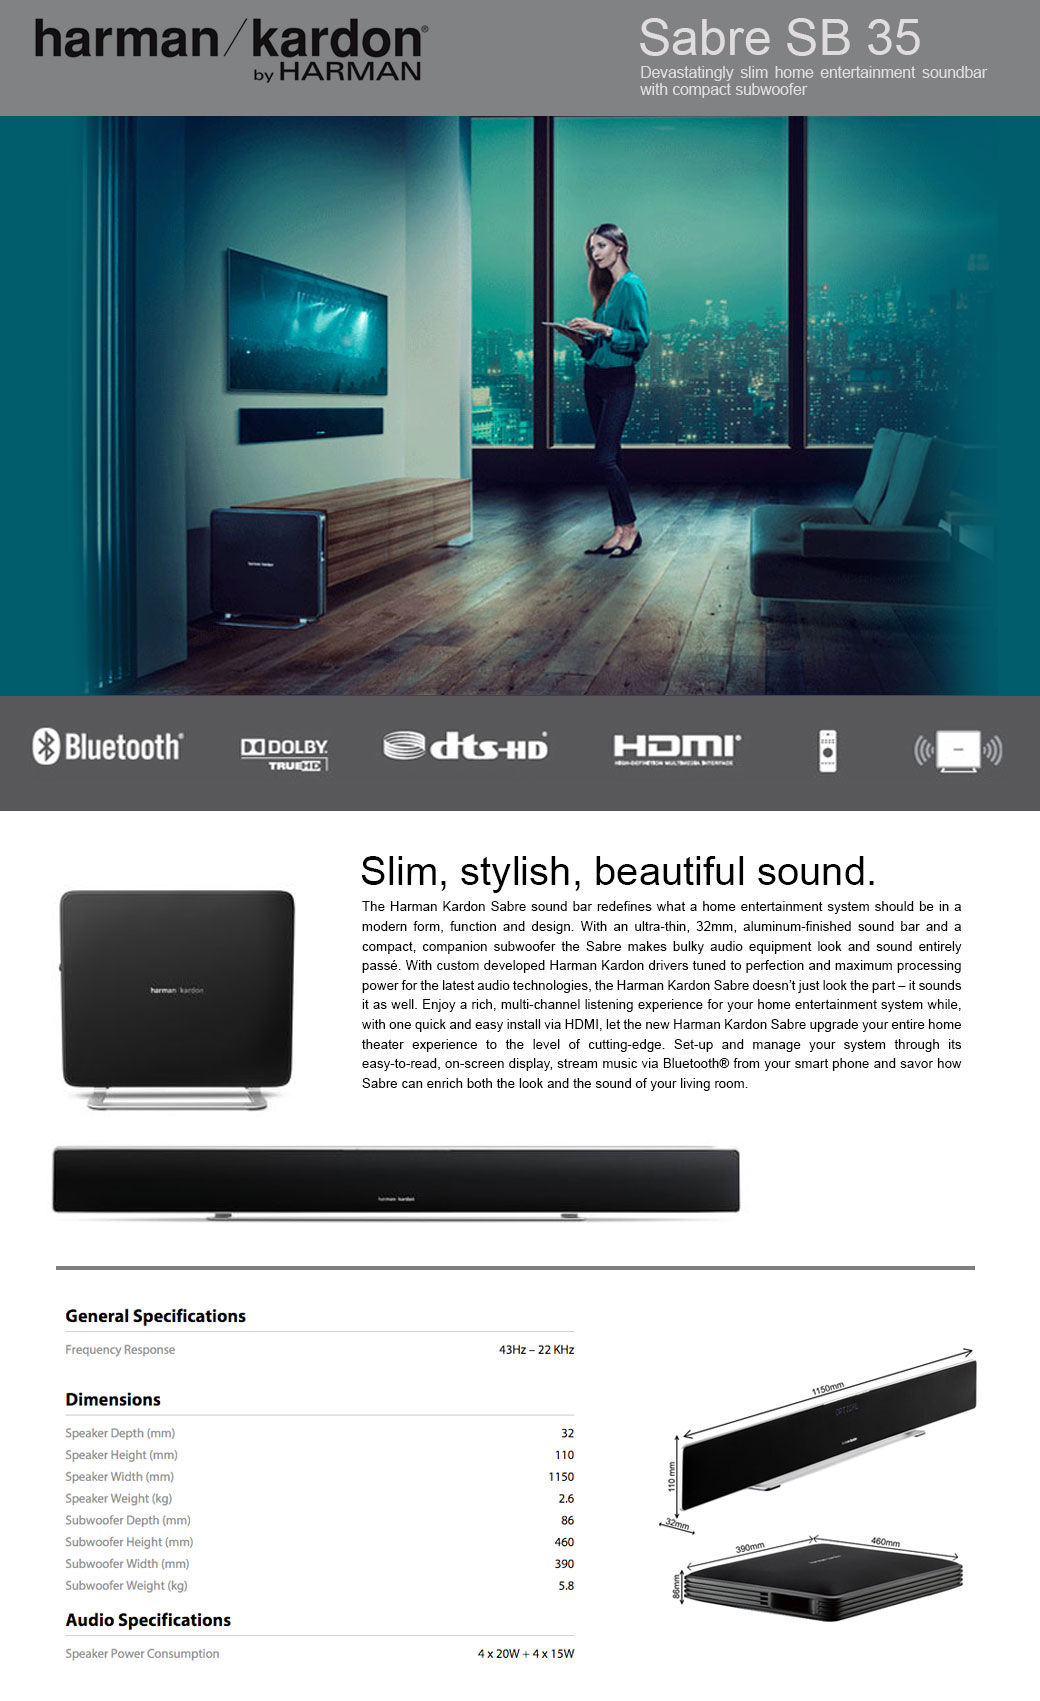 Harman Kardon Sabre 35 Devastatingly Slim Home Entertainment Soundbar With Compact Subwoofer